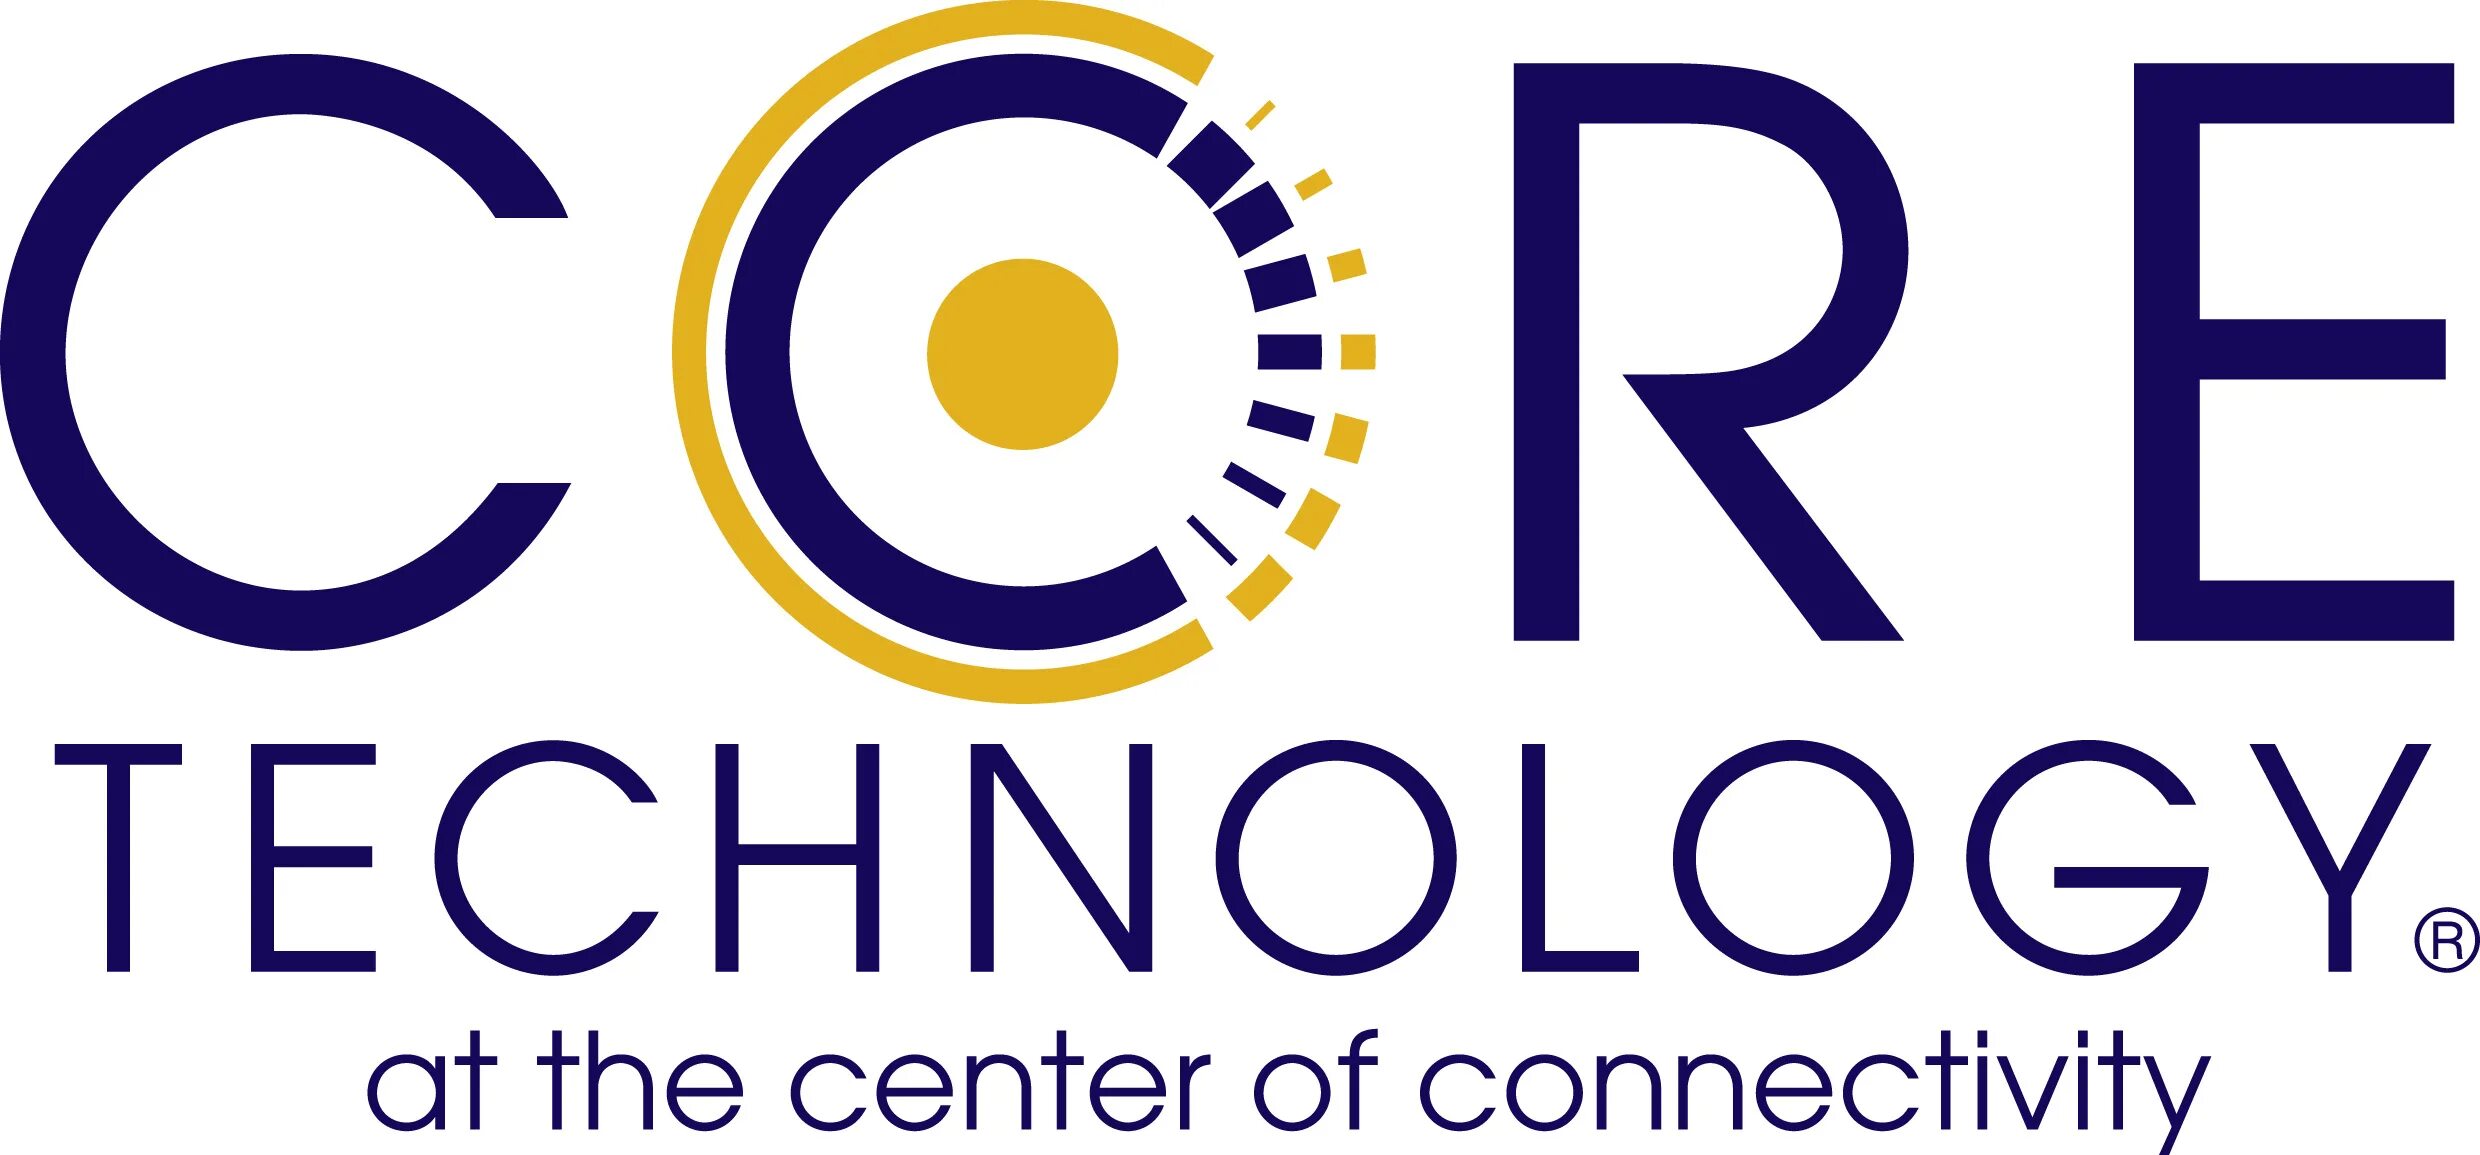 Технолоджи Корпорэйшн. Core logo. Лого Core Club. SQL Technologies Corp. акции лого.